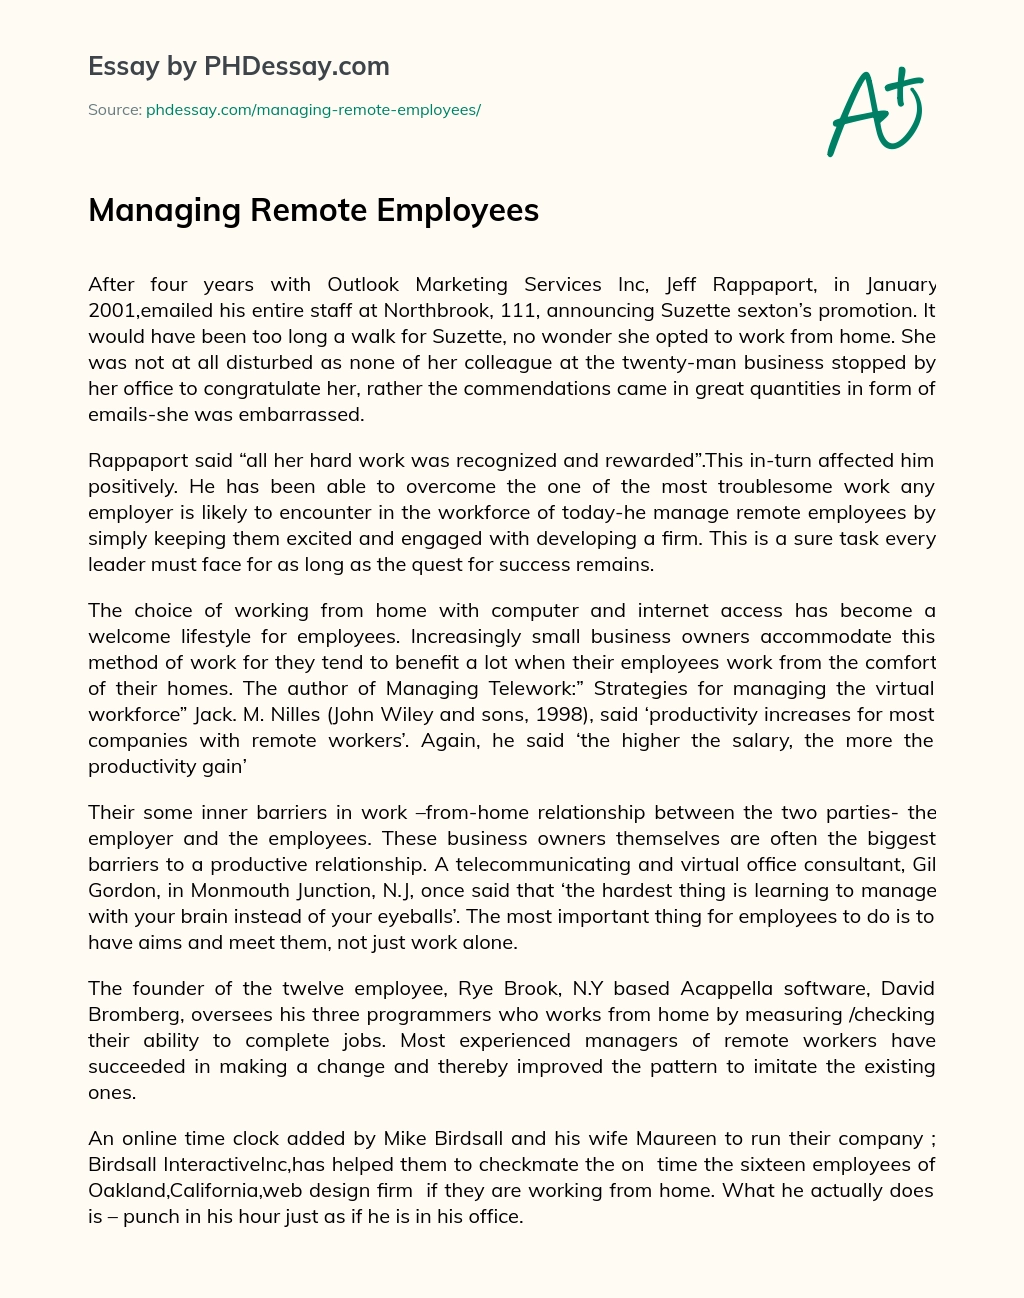 Managing Remote Employees essay